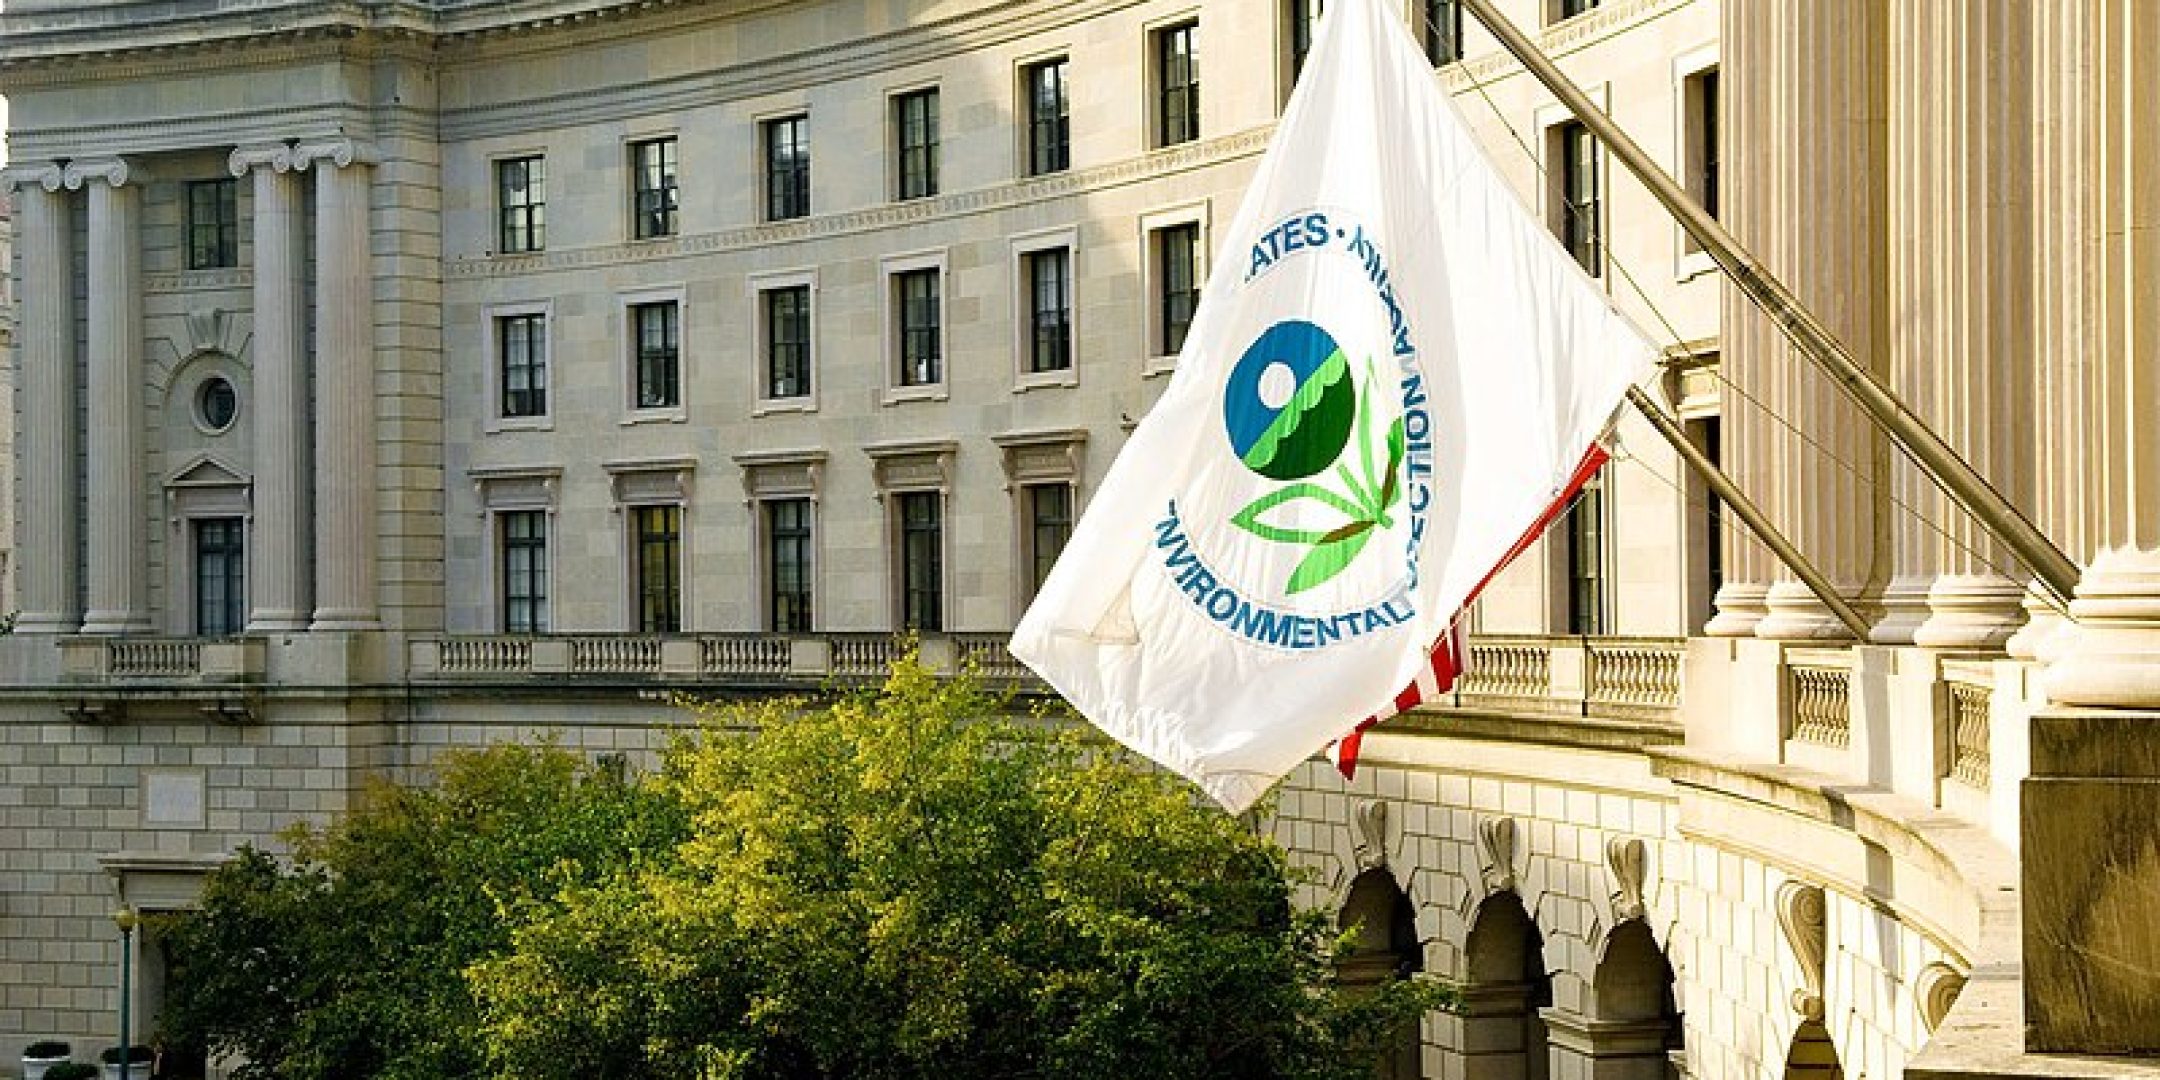 Siège de la US Environmental Protection Agency (US EPA) à Washington D.C.